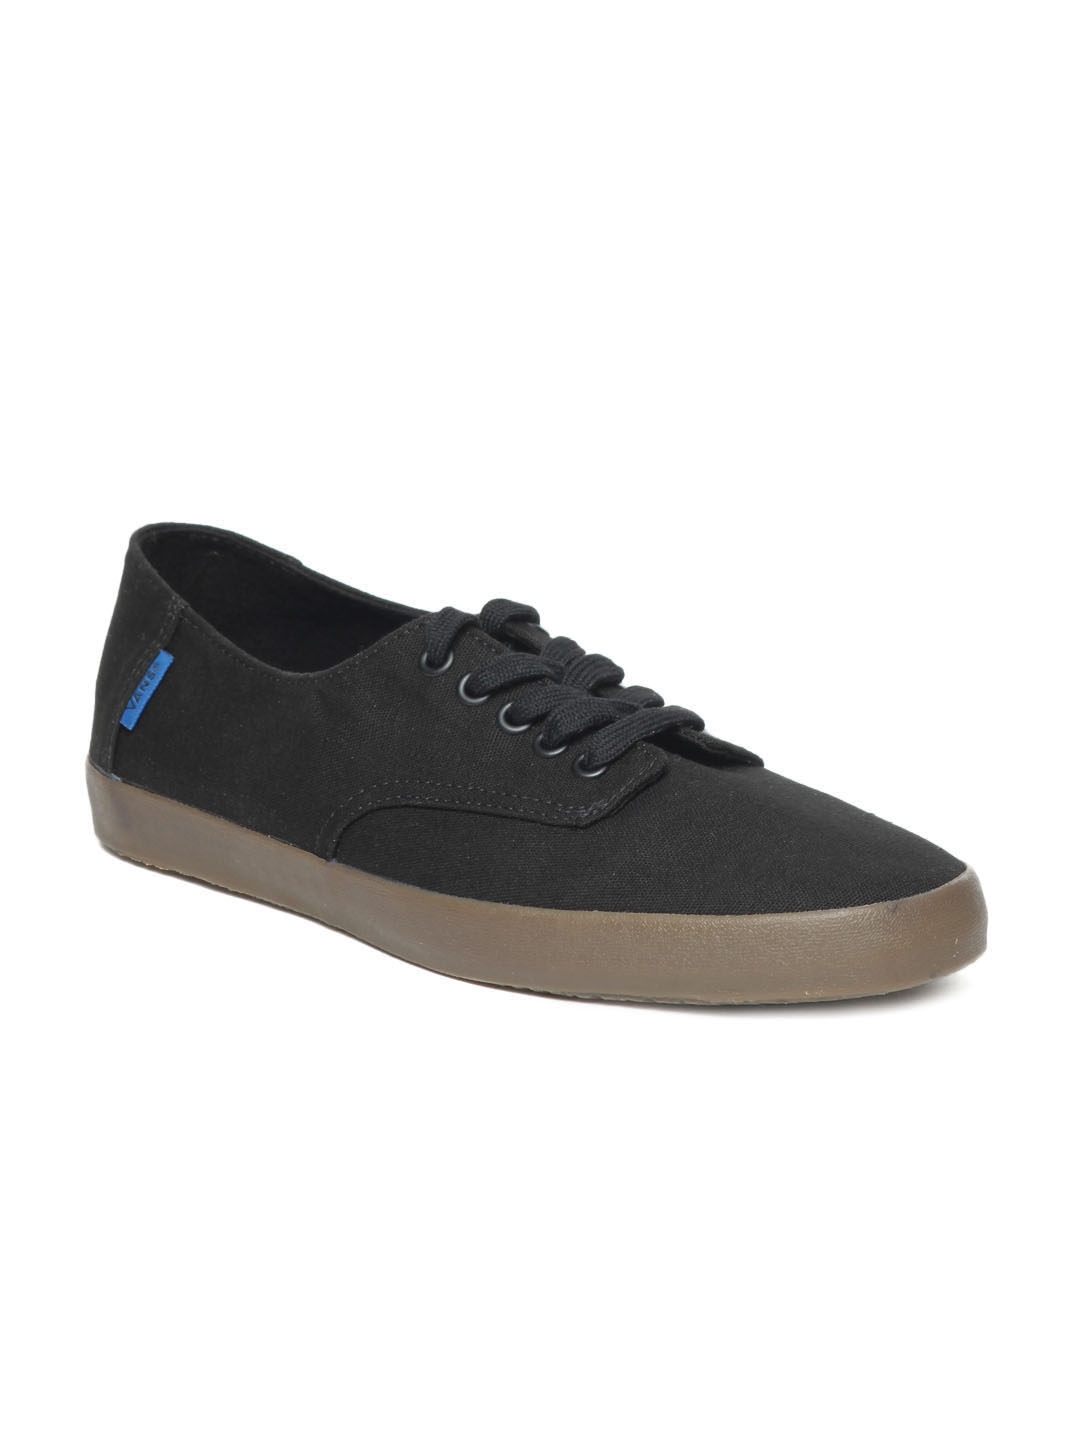 Buy Vans Men Black E Street Shoes - Casual Shoes for Men 66317 | Myntra